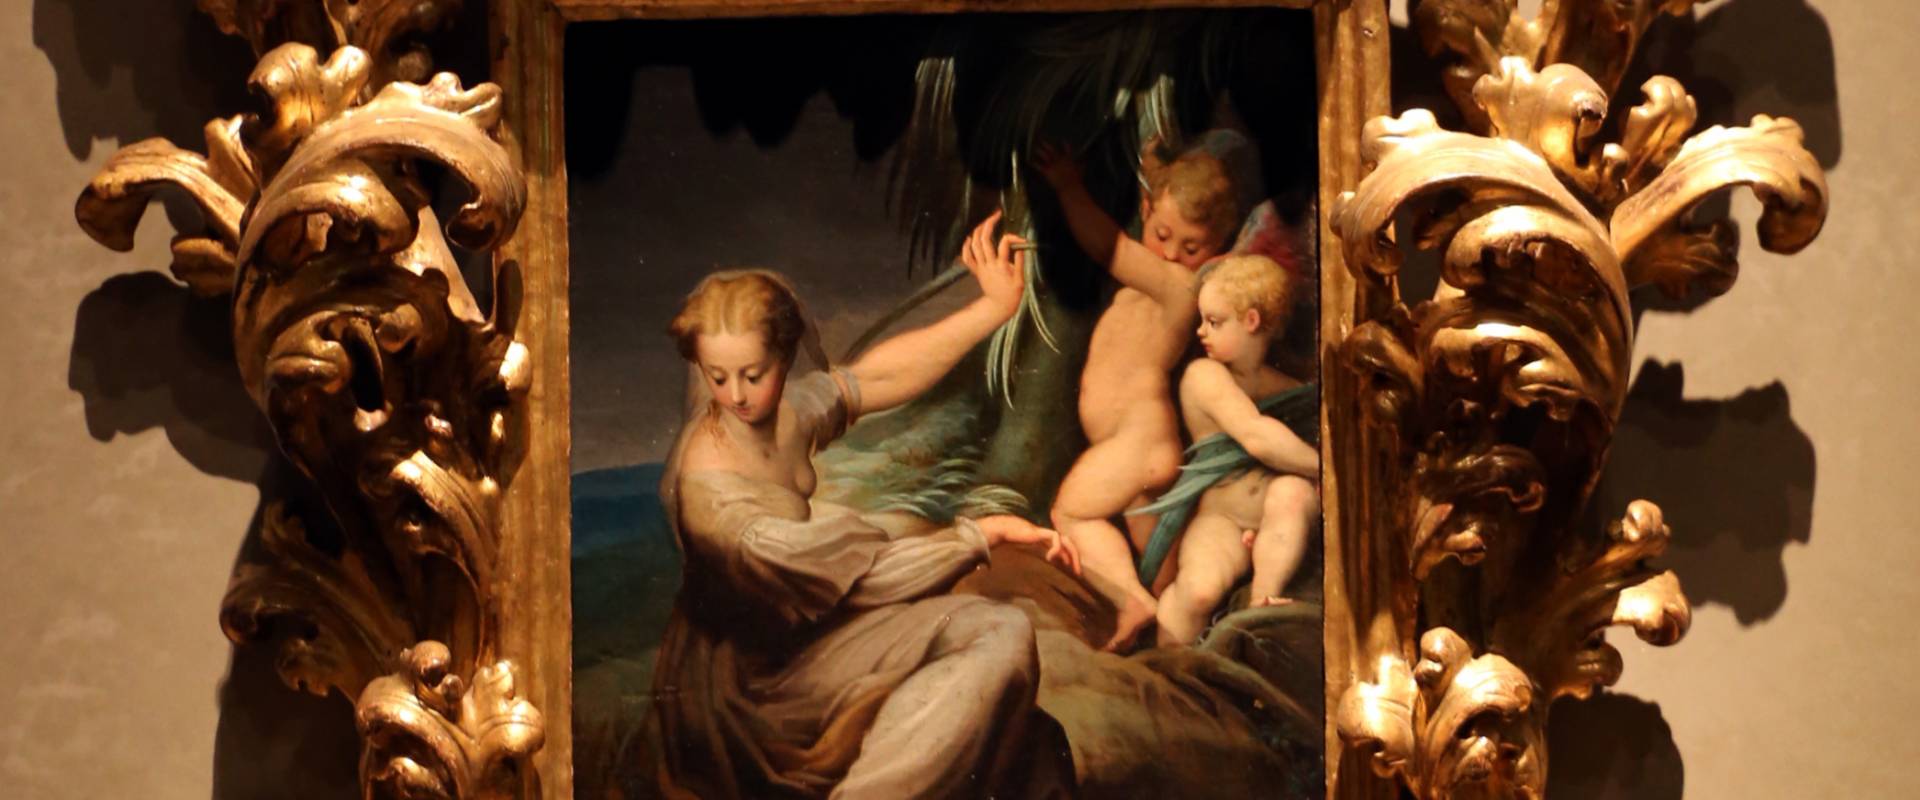 Parmigianino (da), santa caterina d'alessandria e angeli, 1550 ca. 01 photo by Sailko